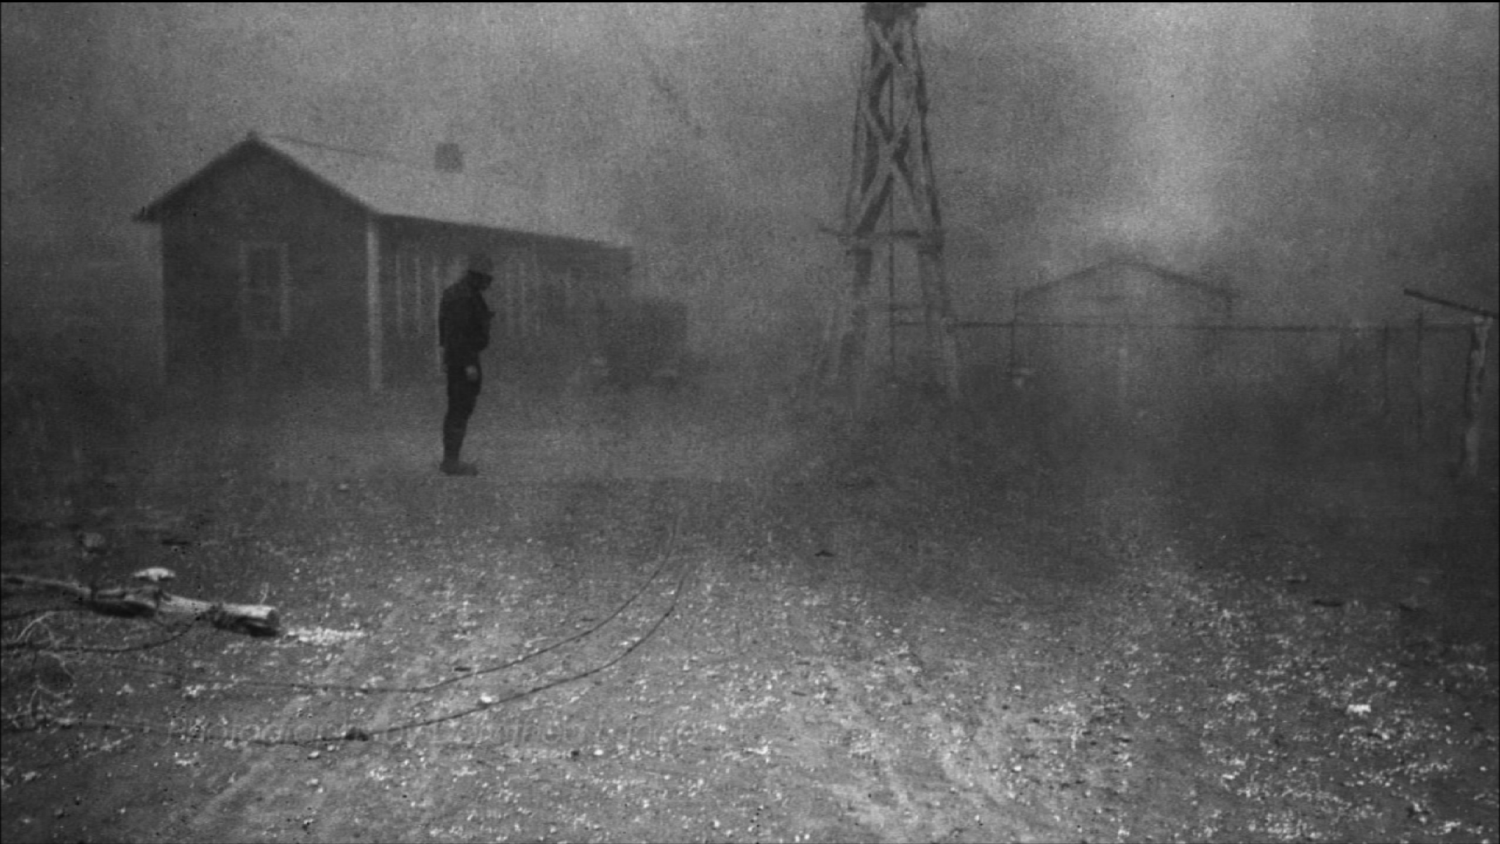 Images Of The Dust Bowl Show Lives Plagued By Death, Destruction